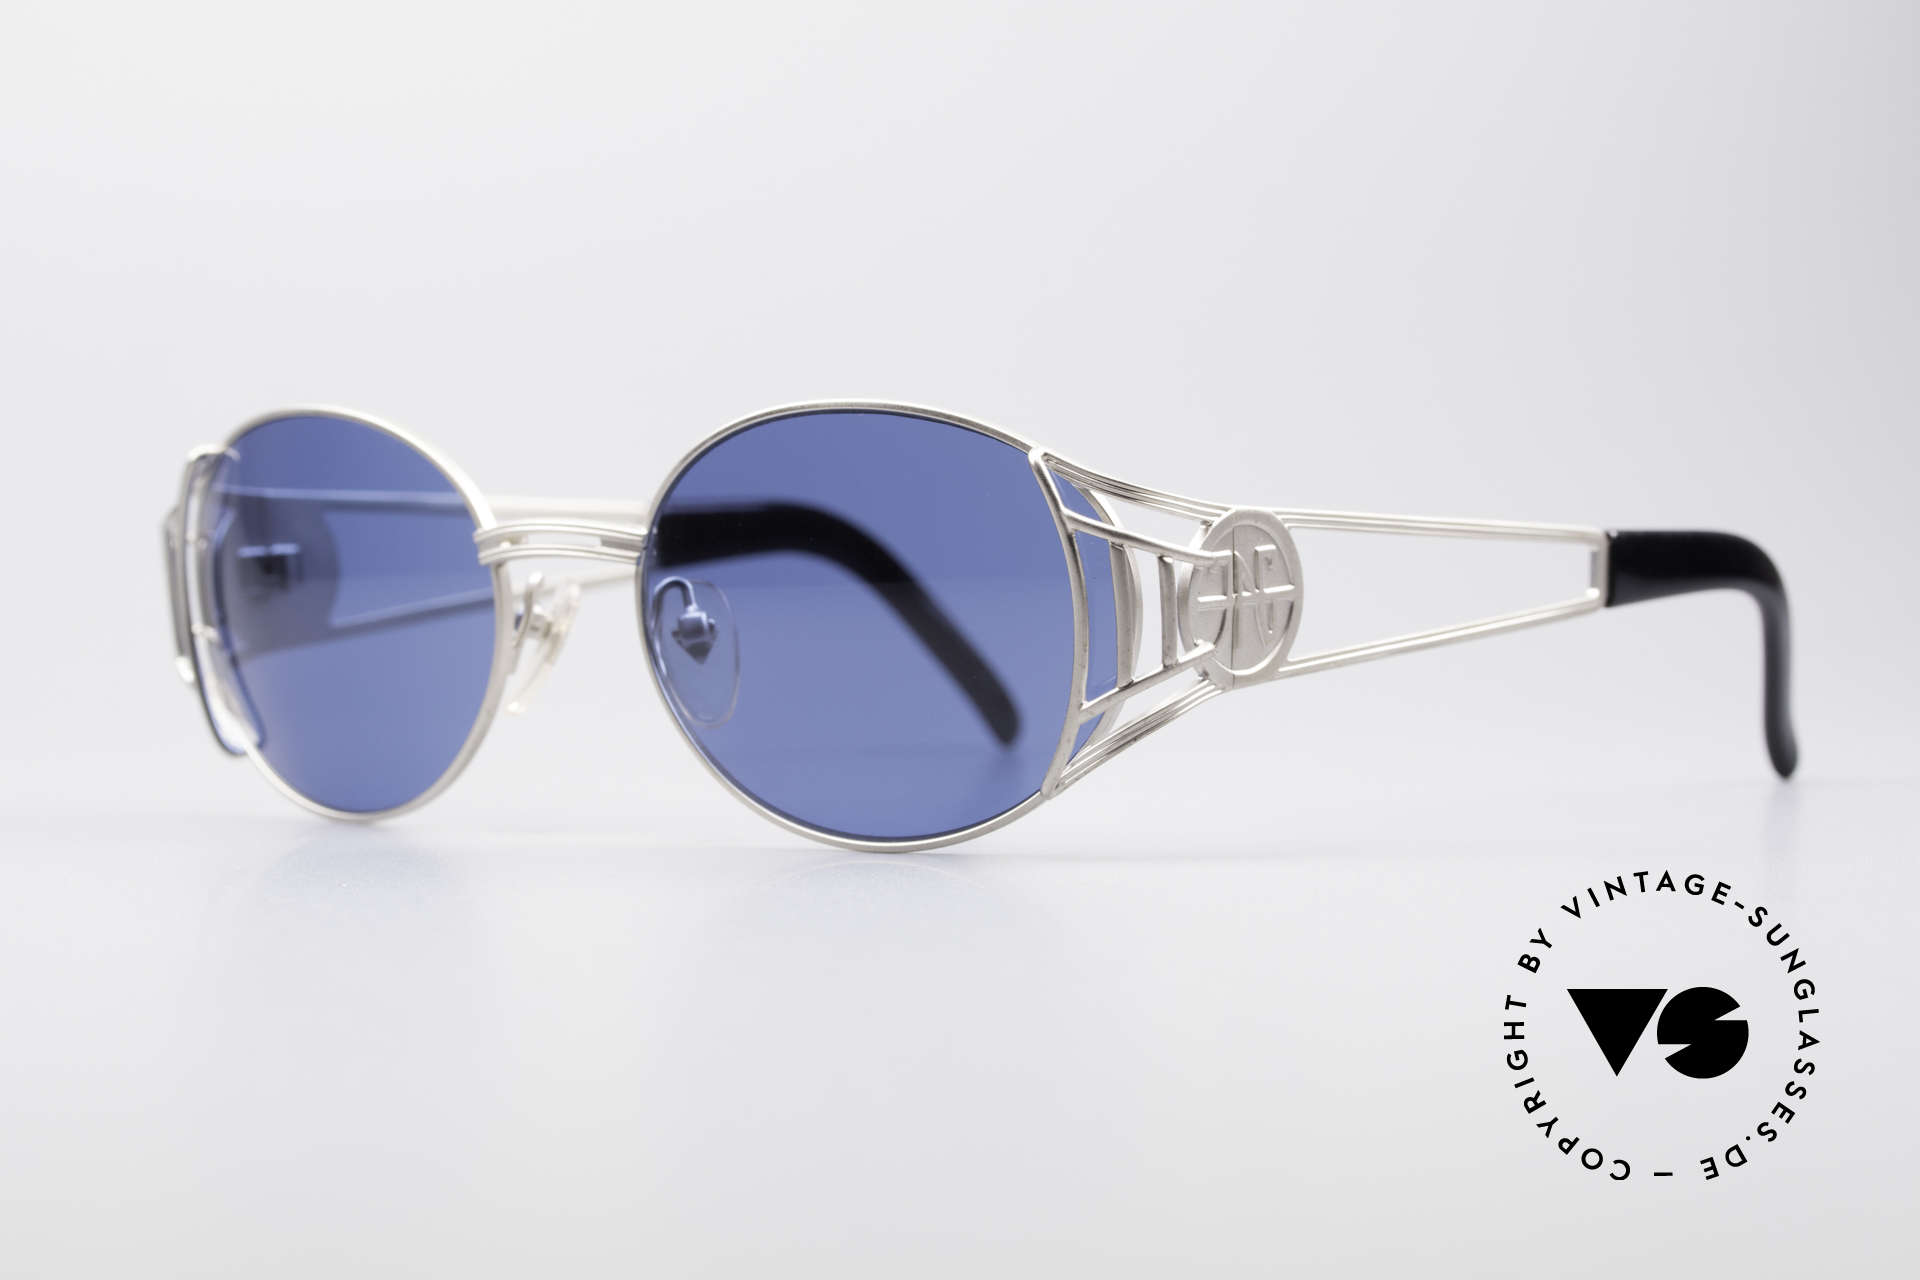 Jean Paul Gaultier 58-6102 Steampunk Sunglasses